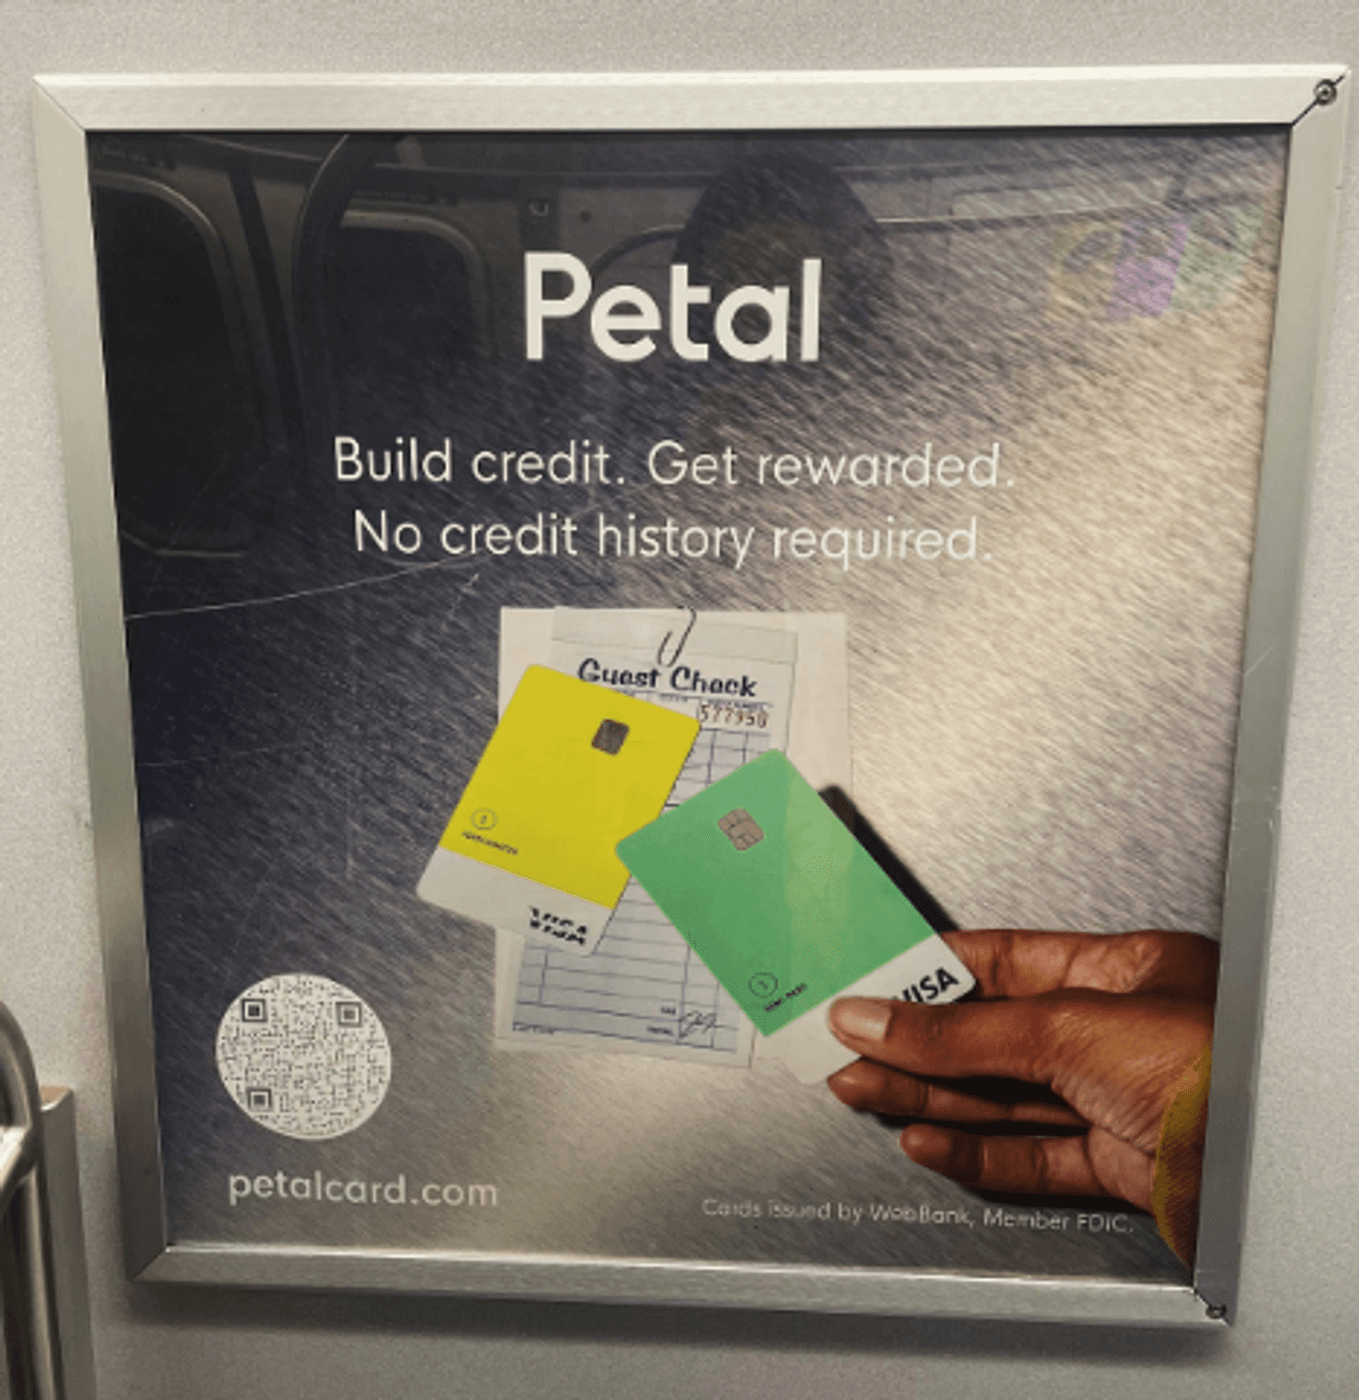 Petal subway ad